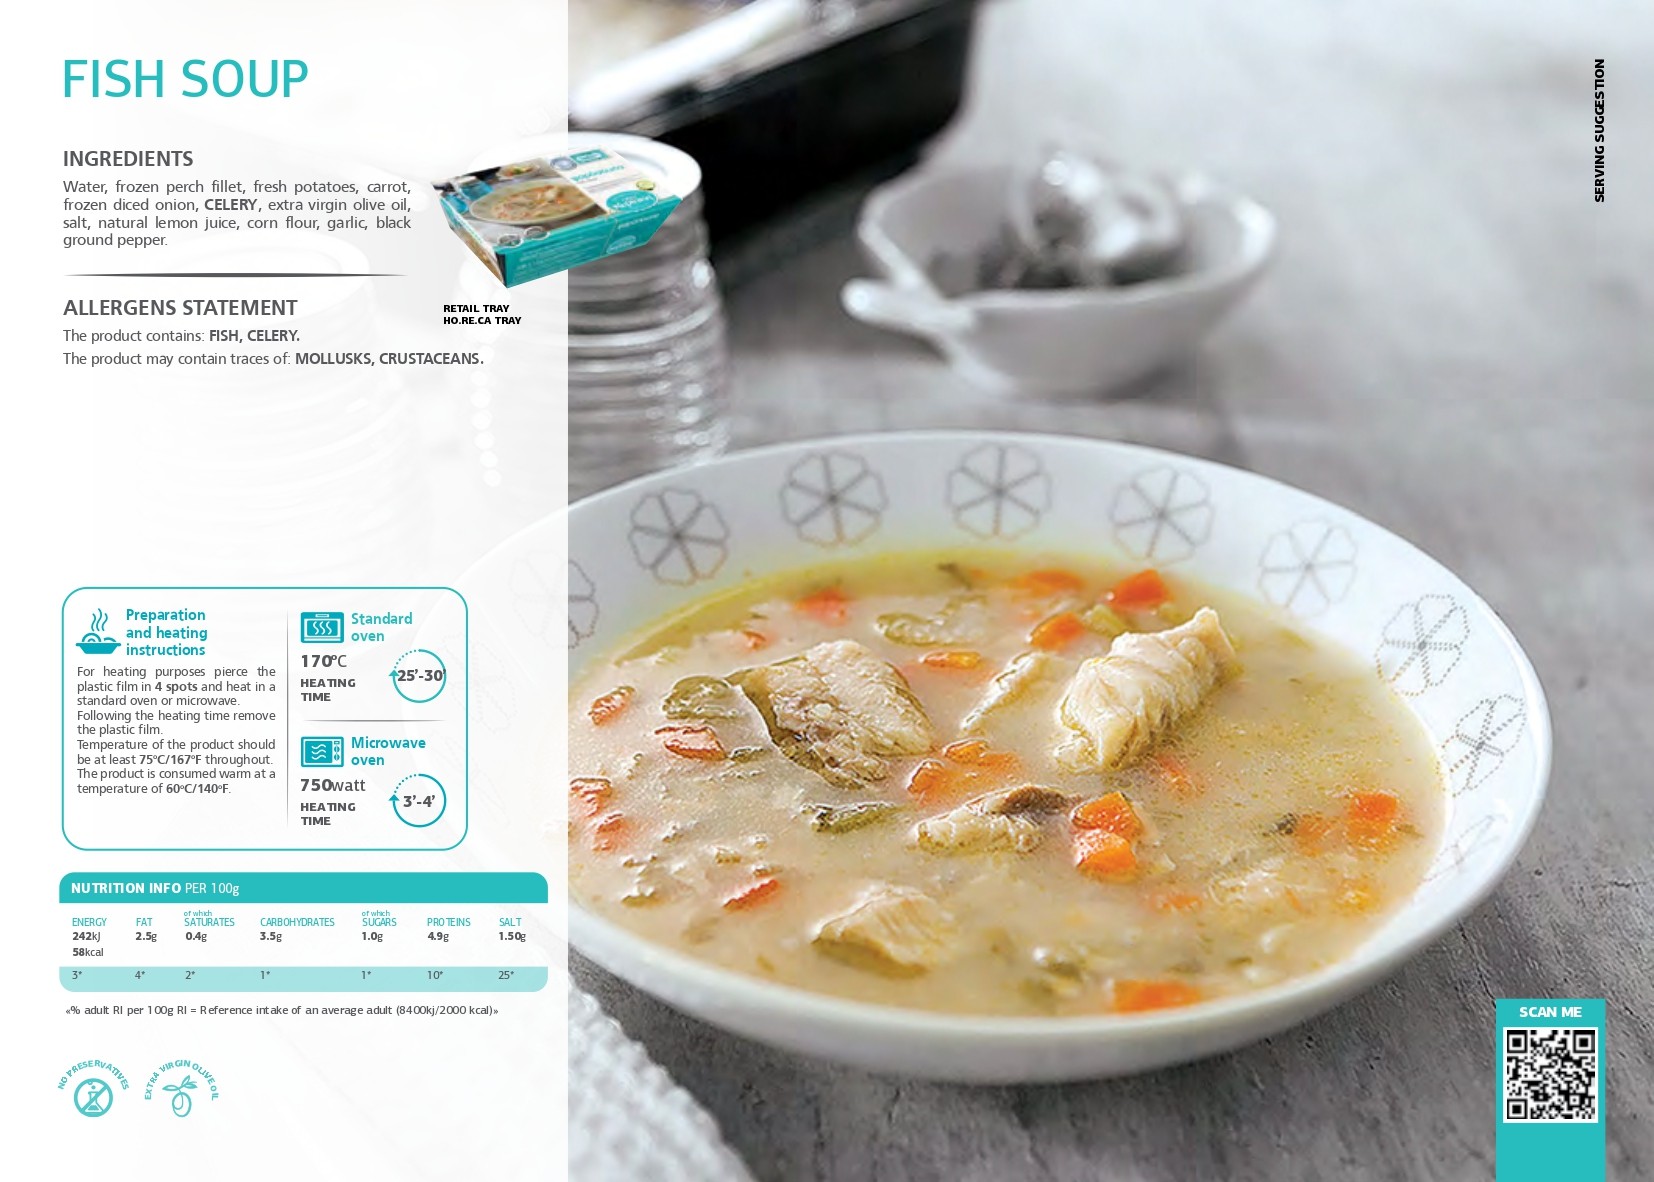 SK - Fish soup pdf image